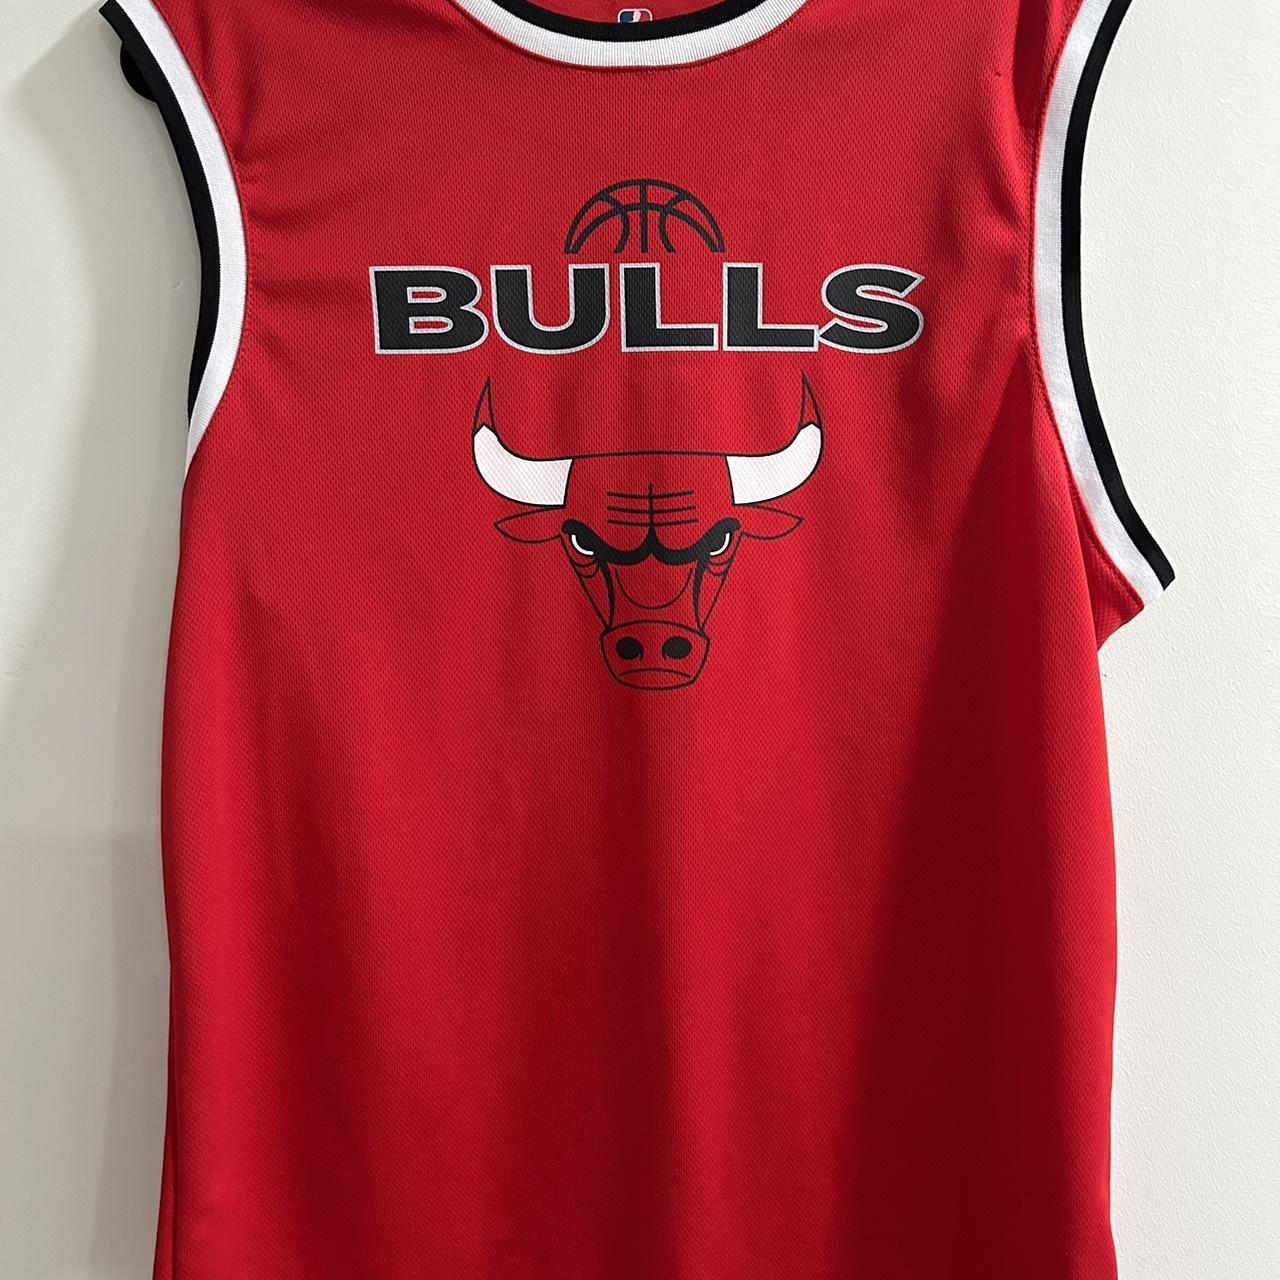 bulls practice jersey